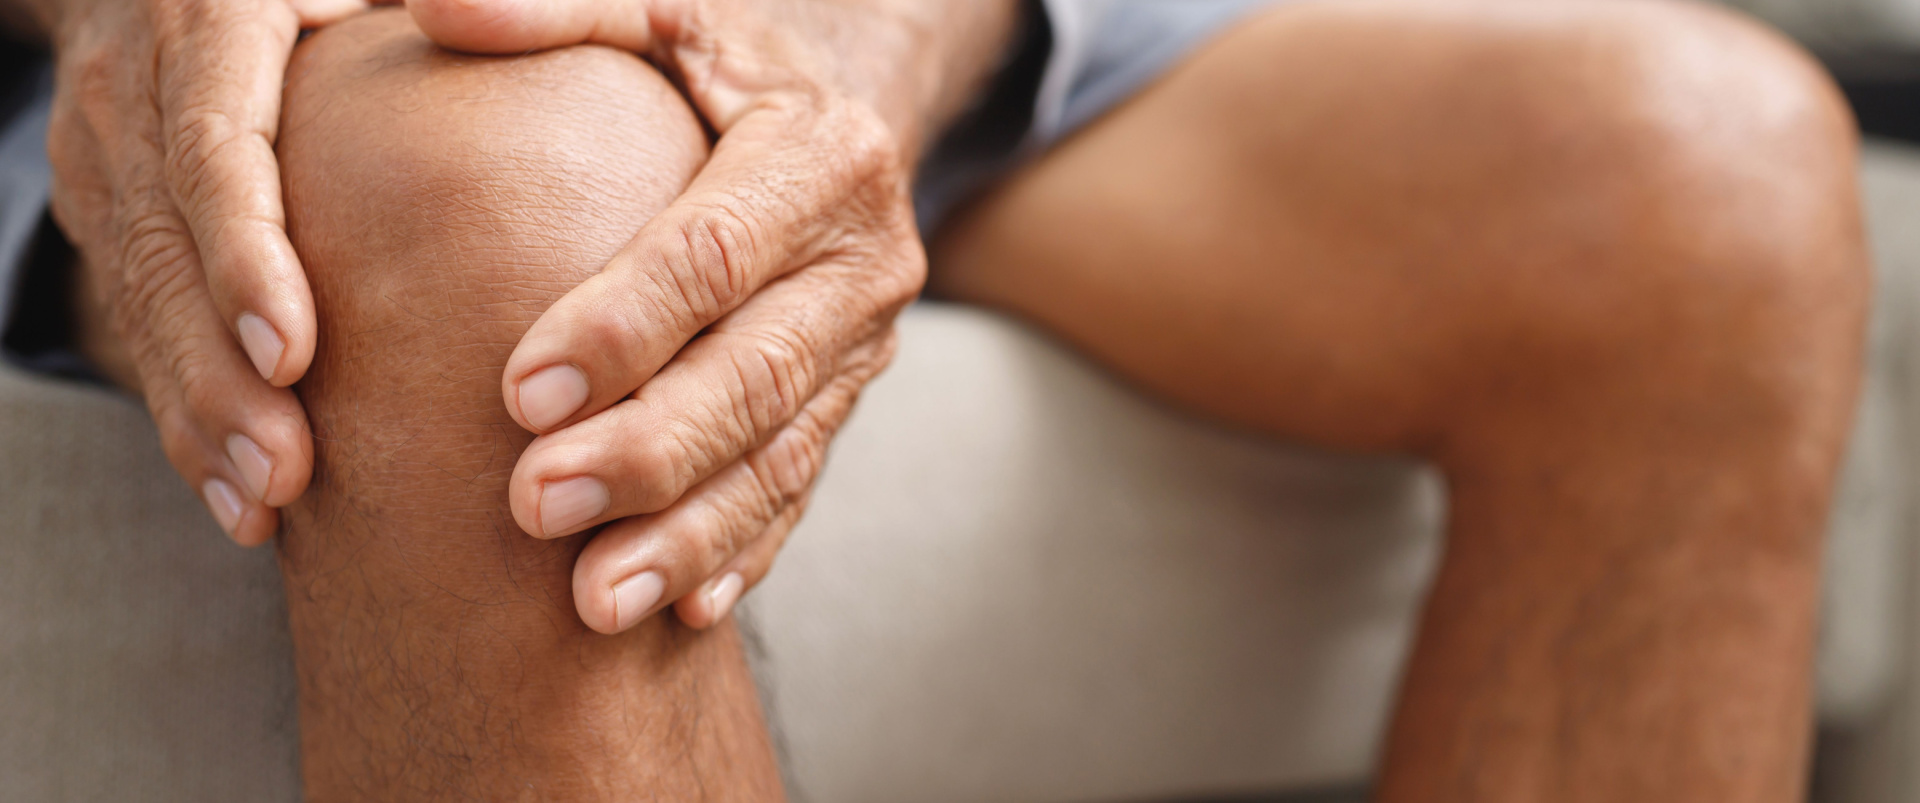 Arthritis Pain in Knee: Causes, Symptoms & Treatment